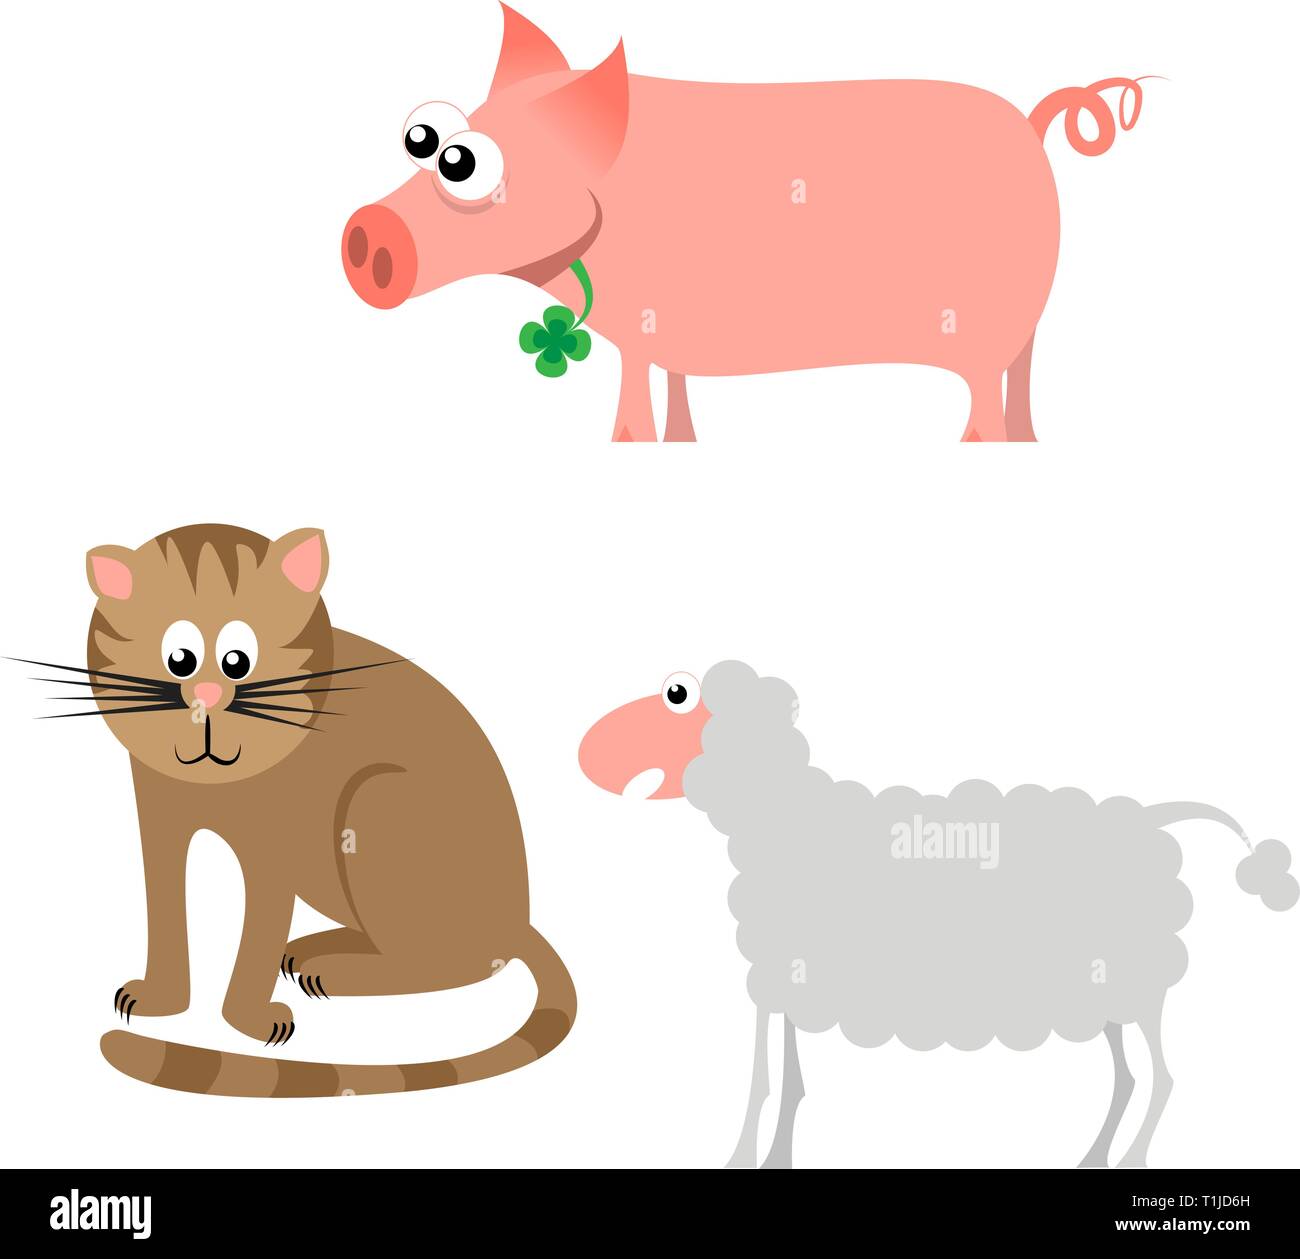 Pig, cat and sheet - cartoon vector illustrations Stock Vector